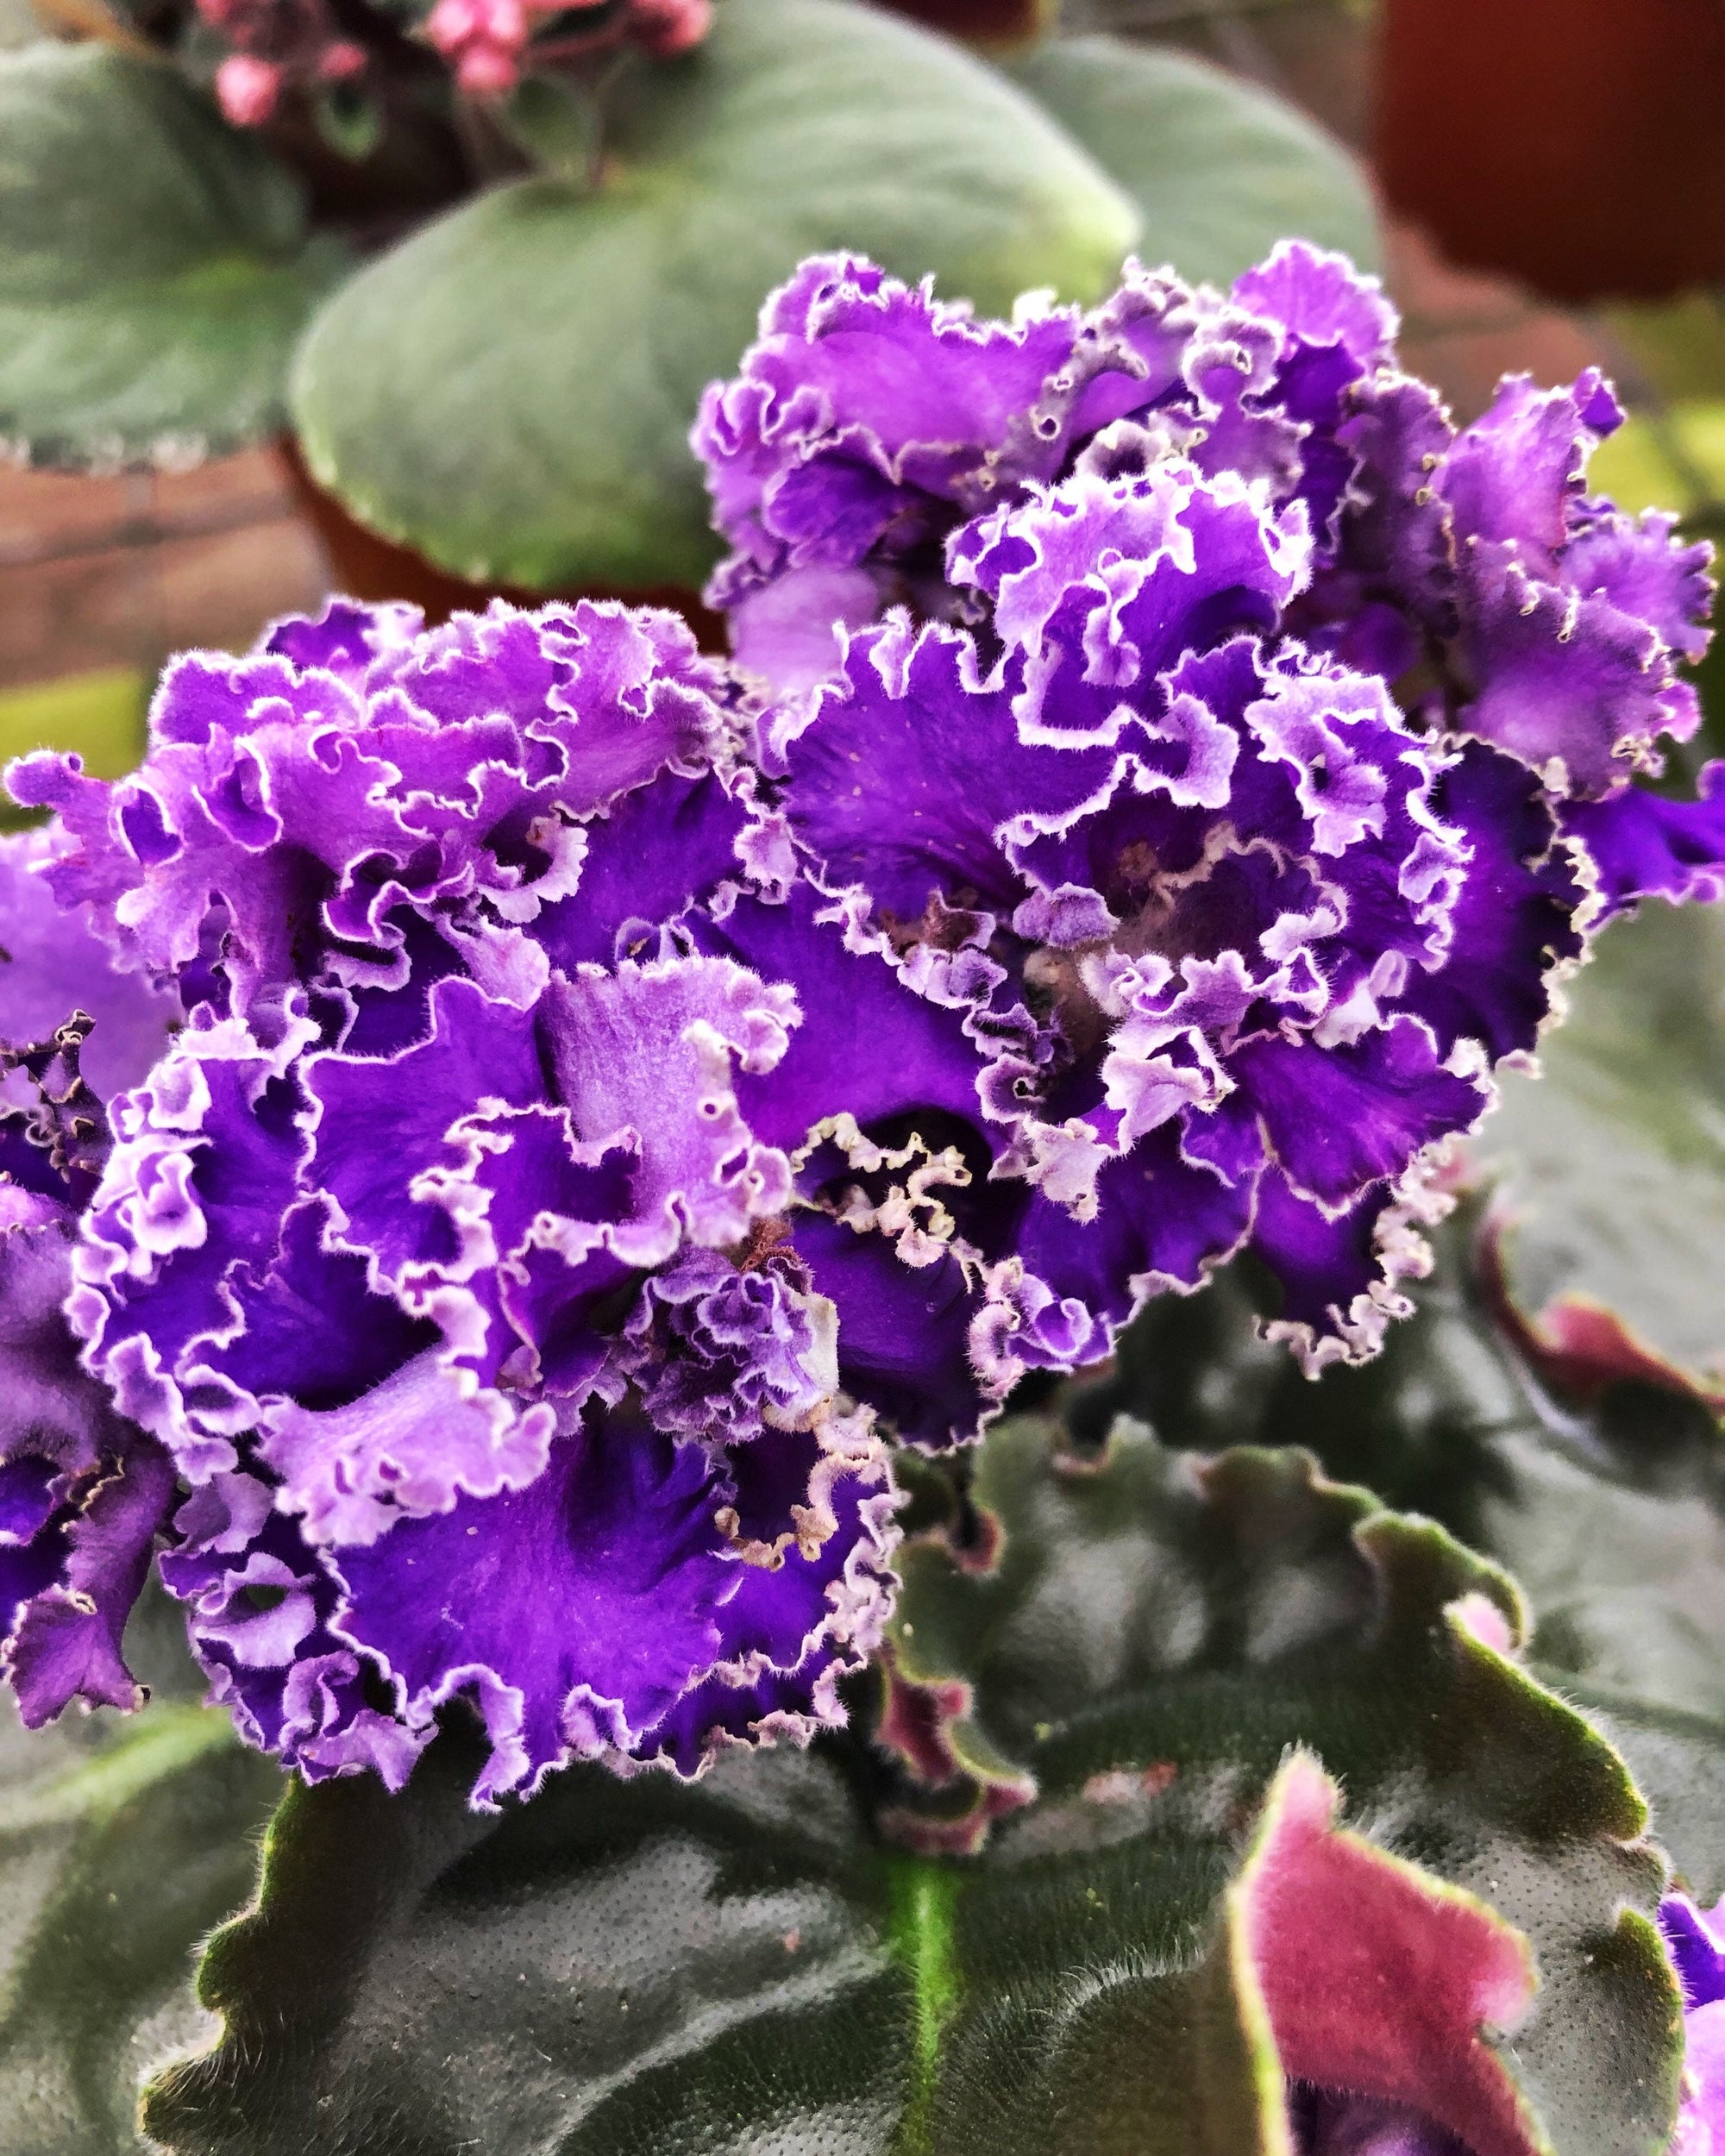 Live house plant variegated purple huge frilled bloom African Violet Harmony’s ‘Cajun’s Royal Knockout’ garden 4” flower Potted gift